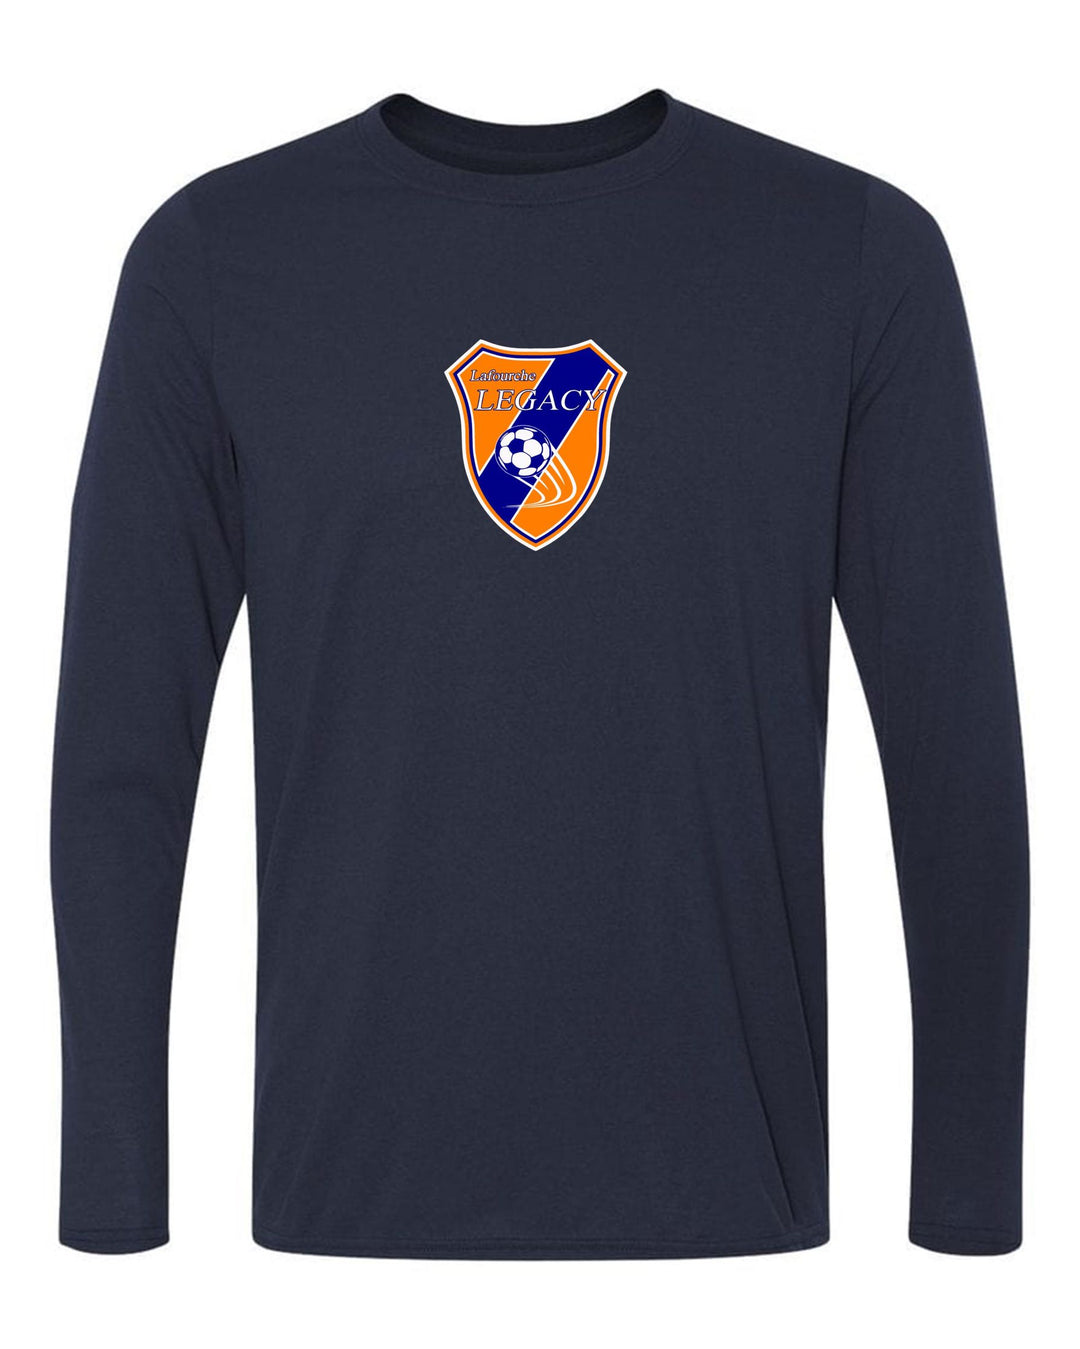 Lefourche Legacy Long-sleeve T-shirt - Navy or Orange  YOUTH MEDIUM NAVY - Third Coast Soccer